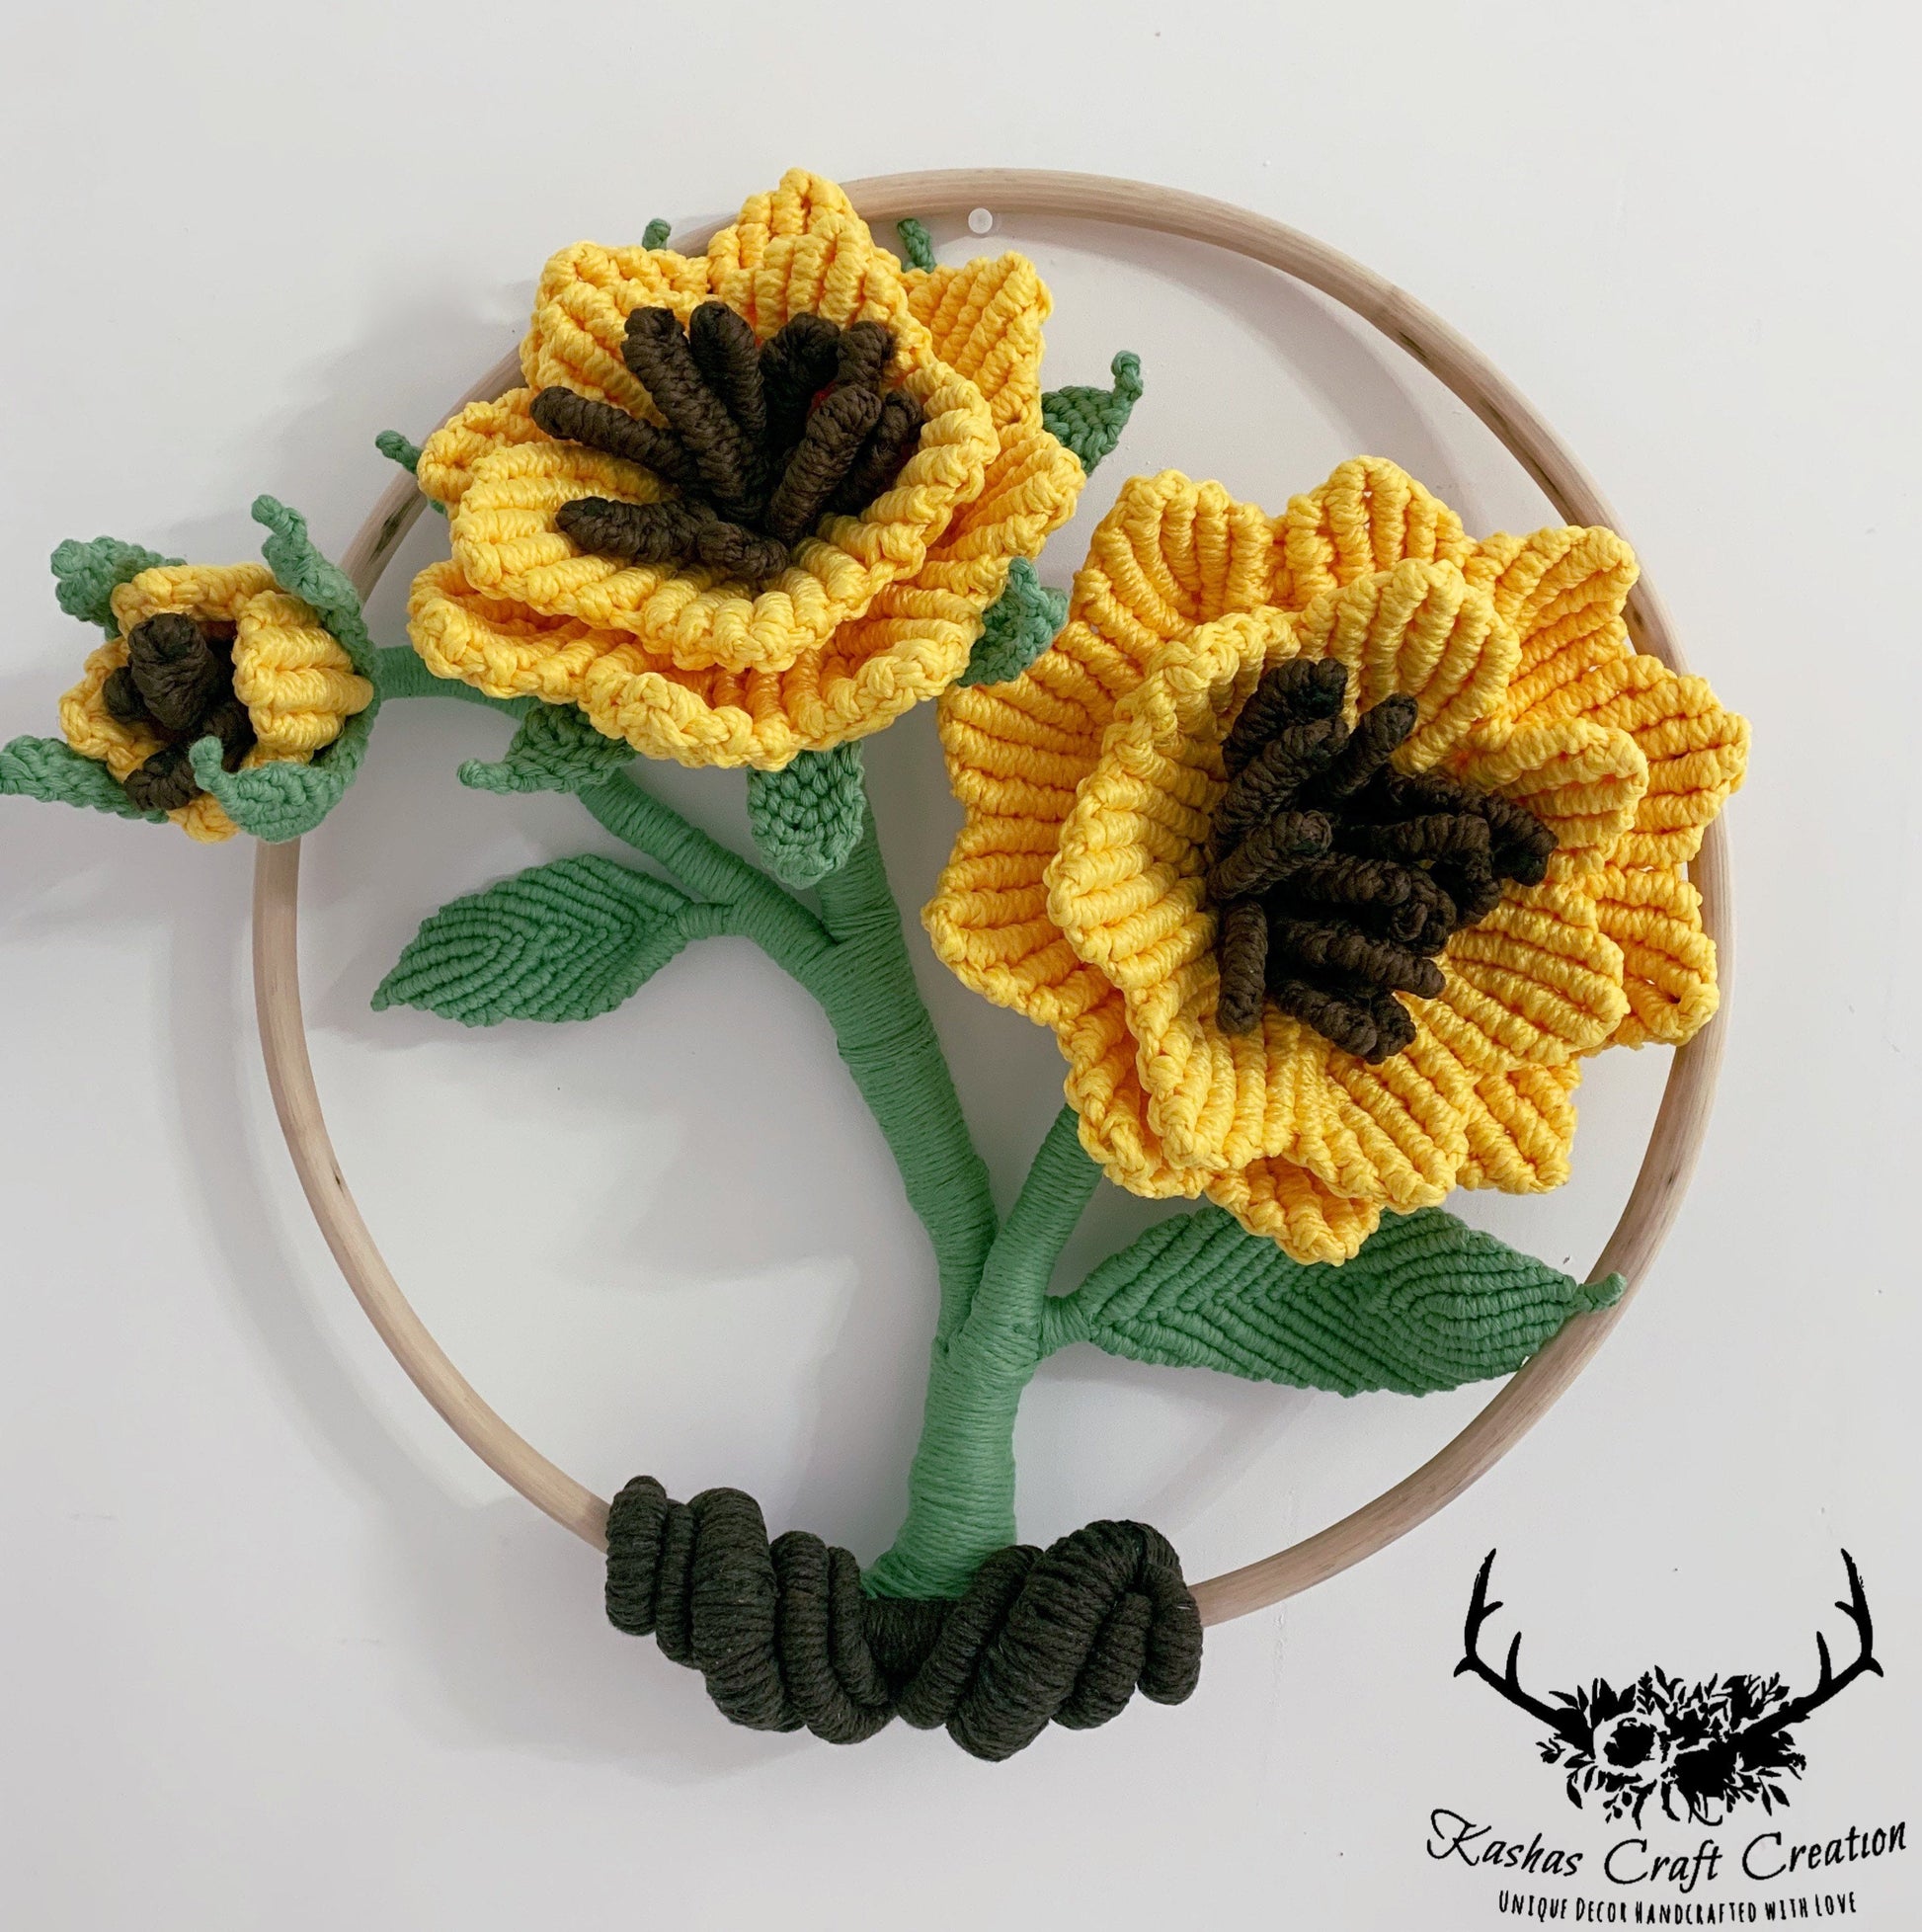 Commission only// custom request//Wild flower Fiber Art